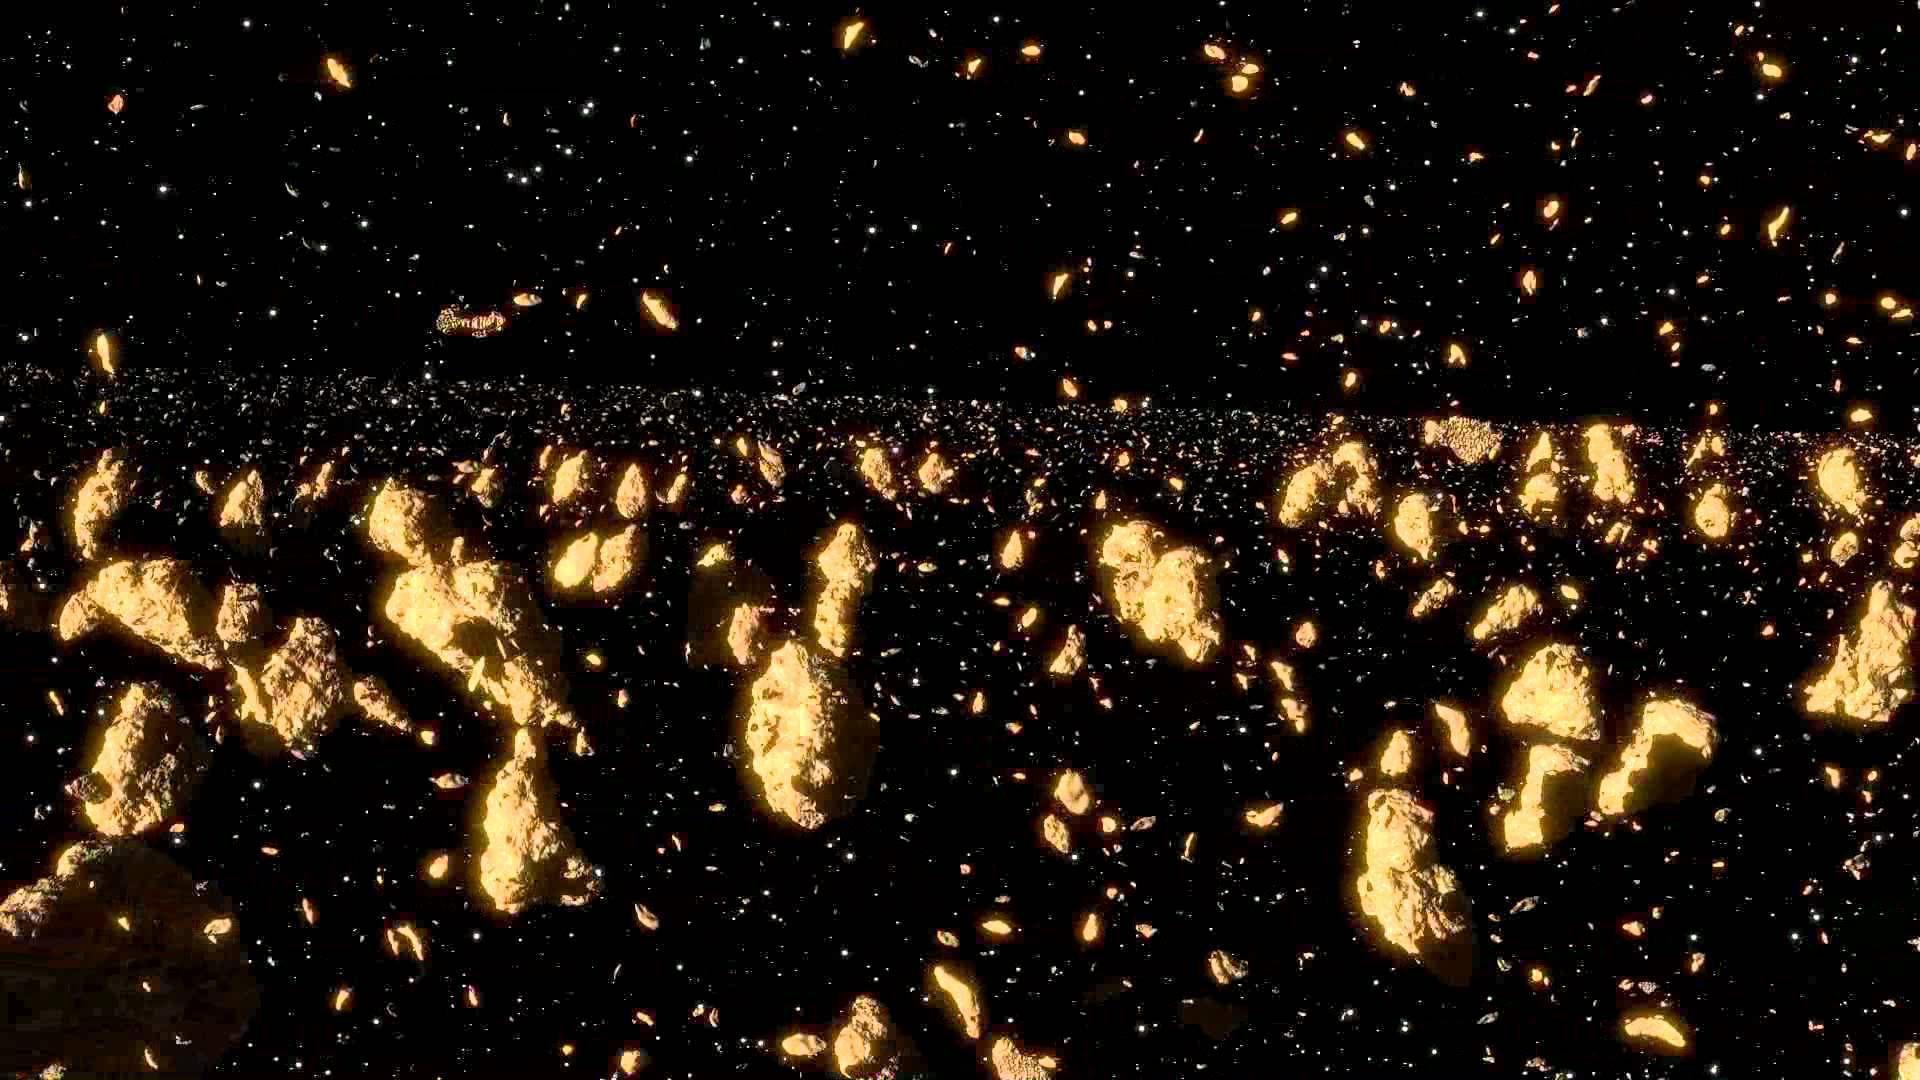 Asteroid Belt Wallpaper Backgrounds